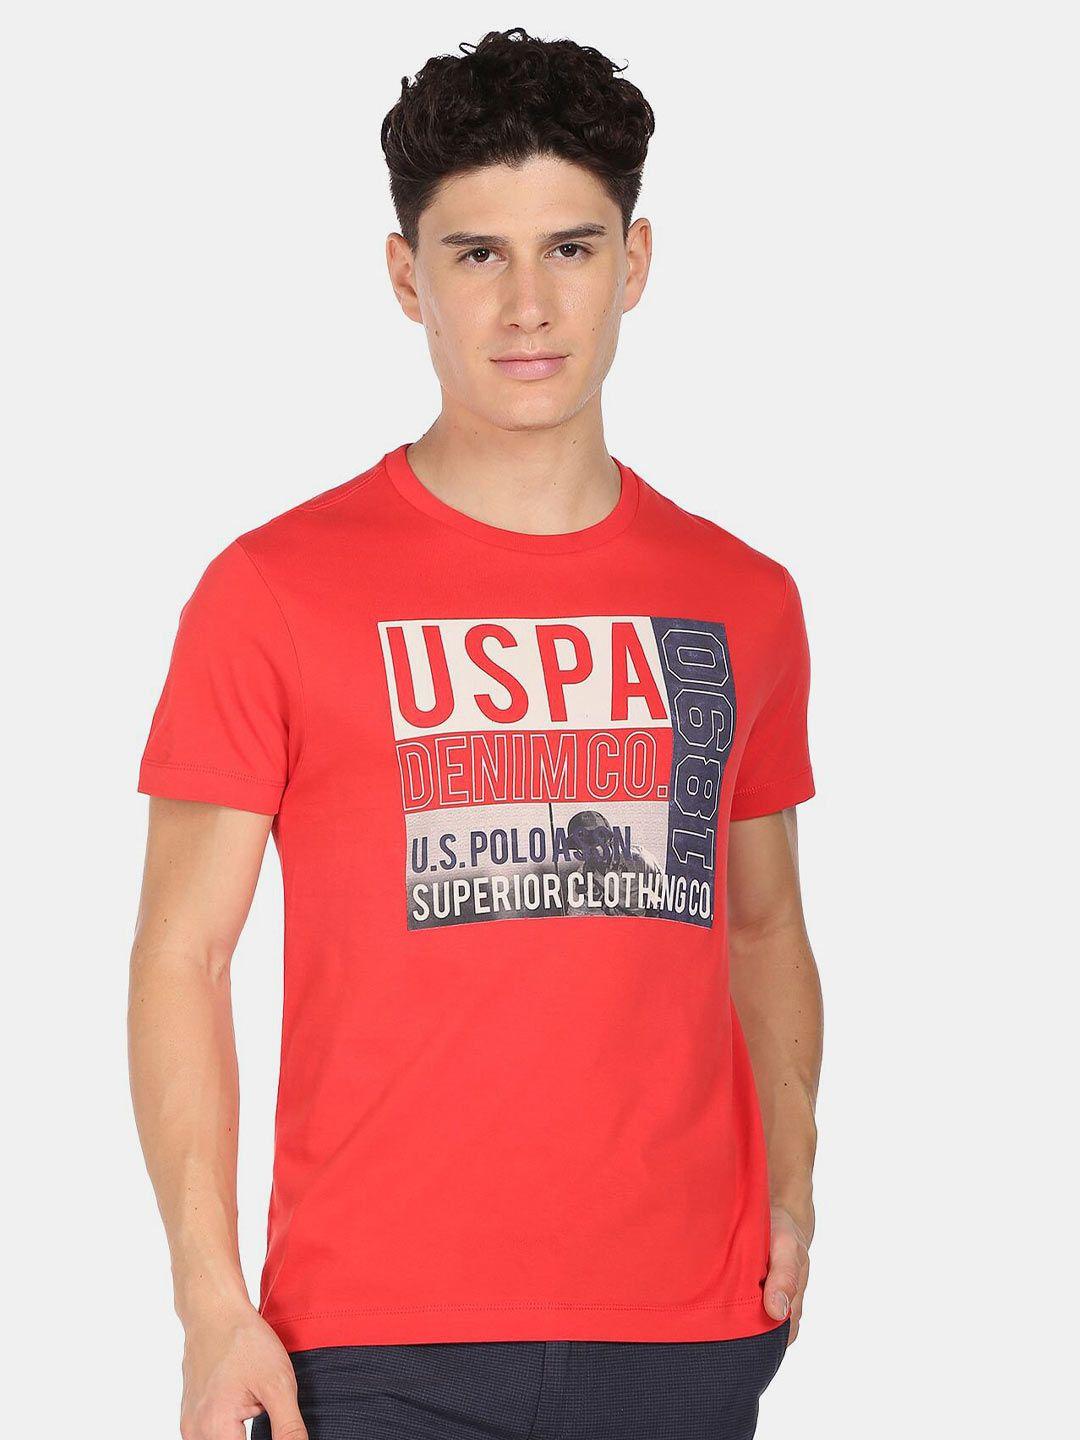 u.s. polo assn. denim co. men red & beige typography printed cotton t-shirt